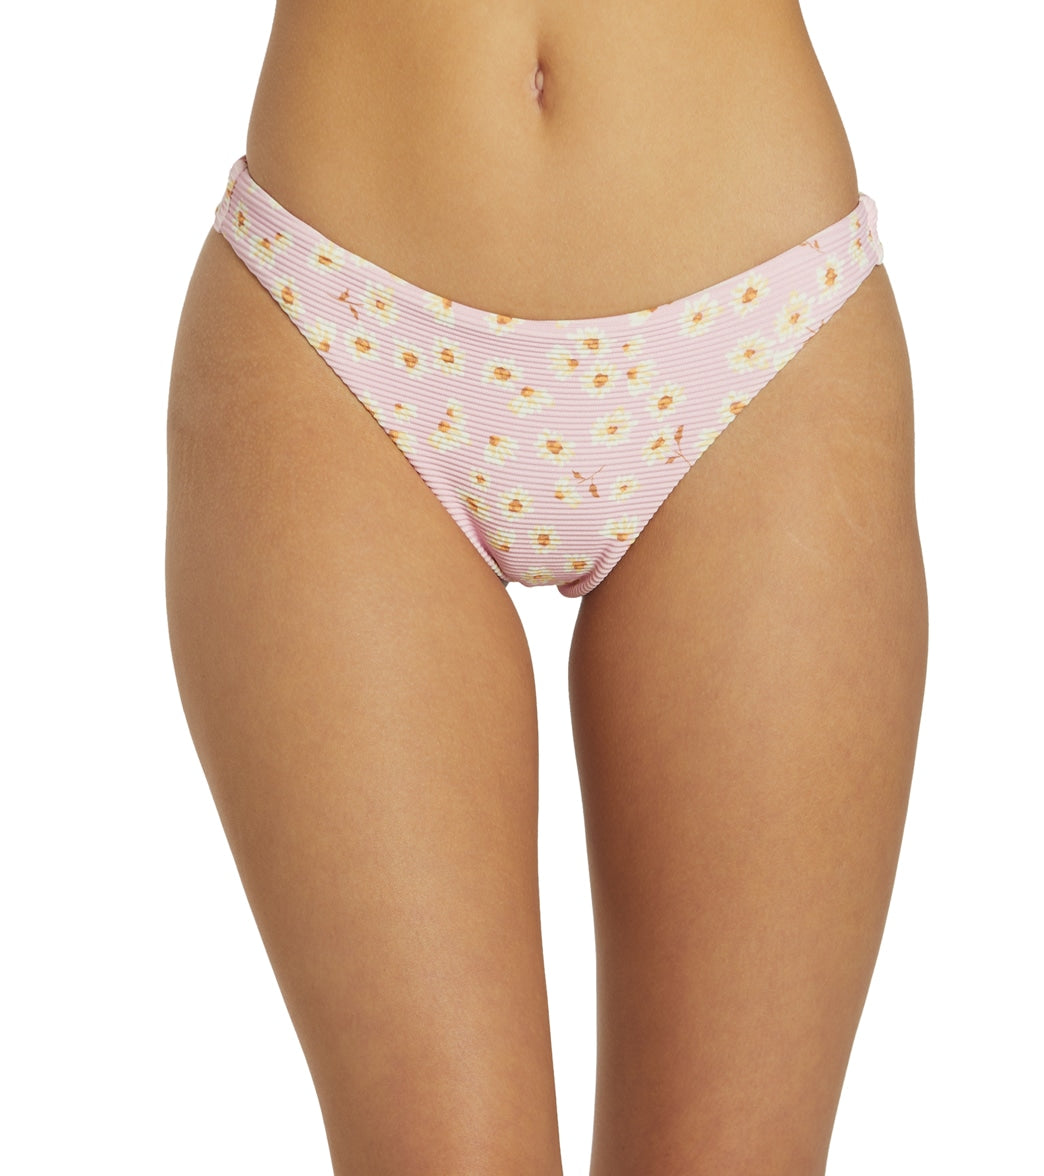 Daisy Craze Pink Floral Print Low-Rise Bikini Bottom